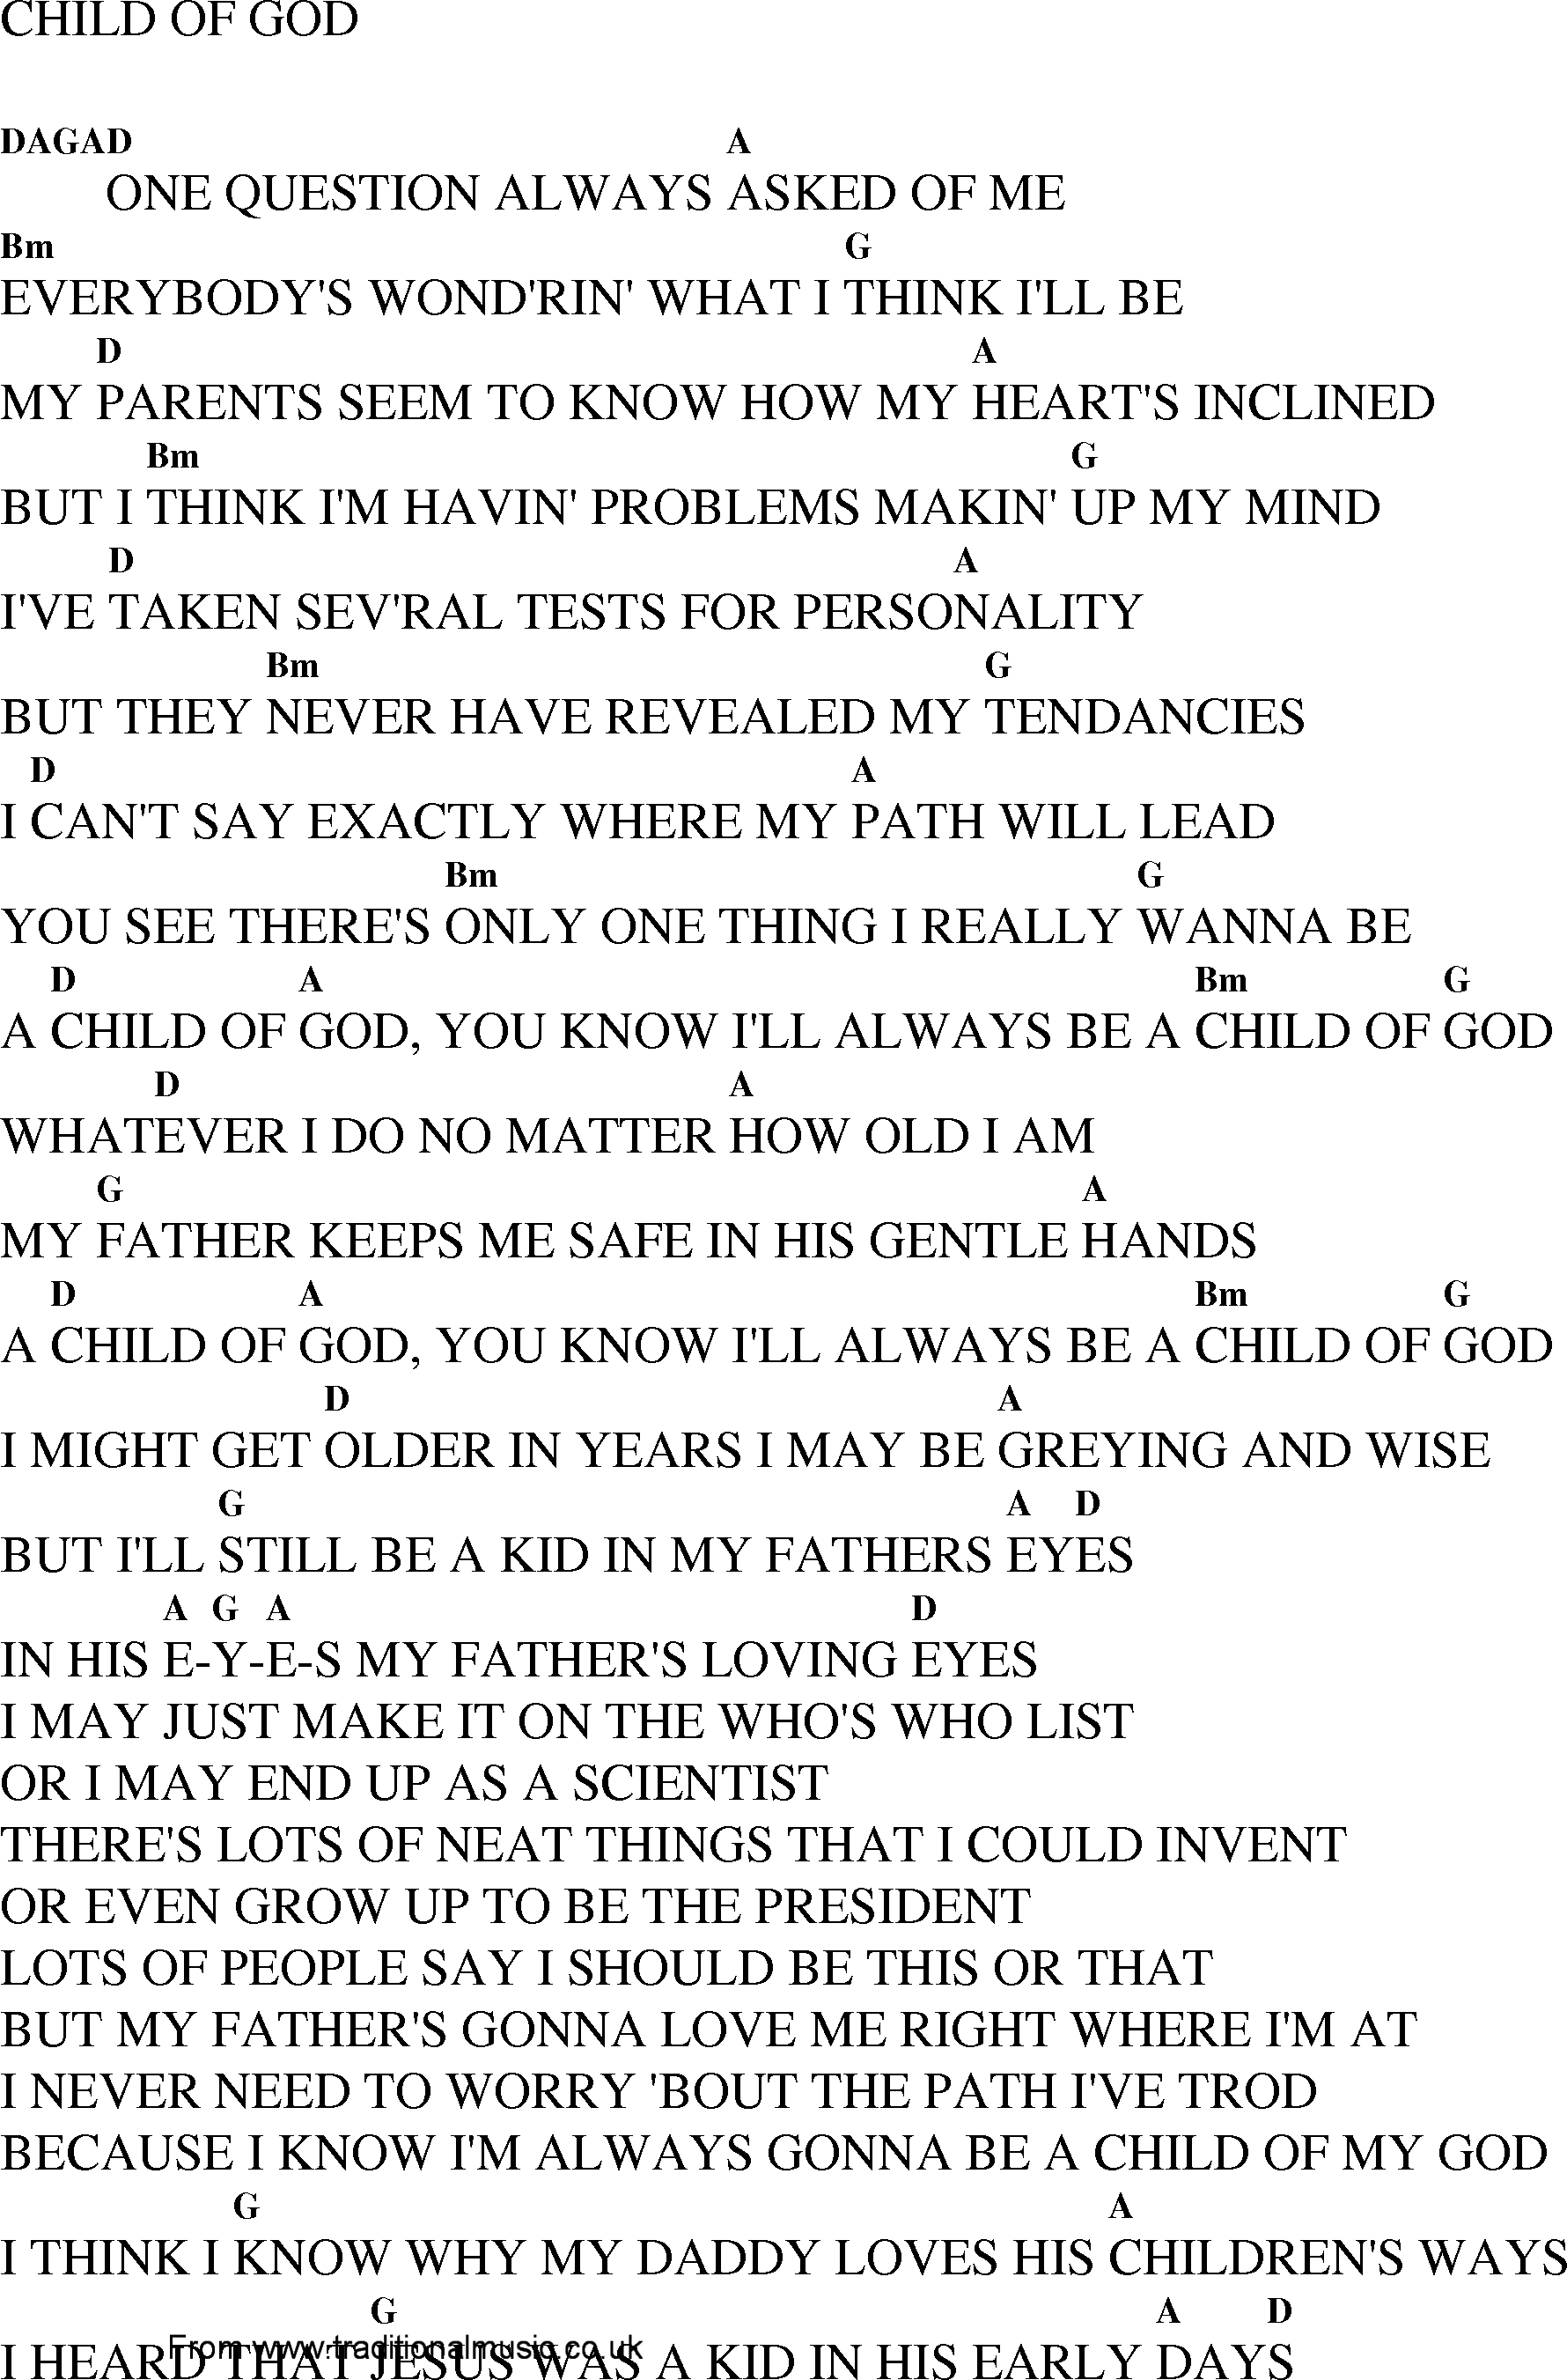 Gospel Song: child_of_god, lyrics and chords.